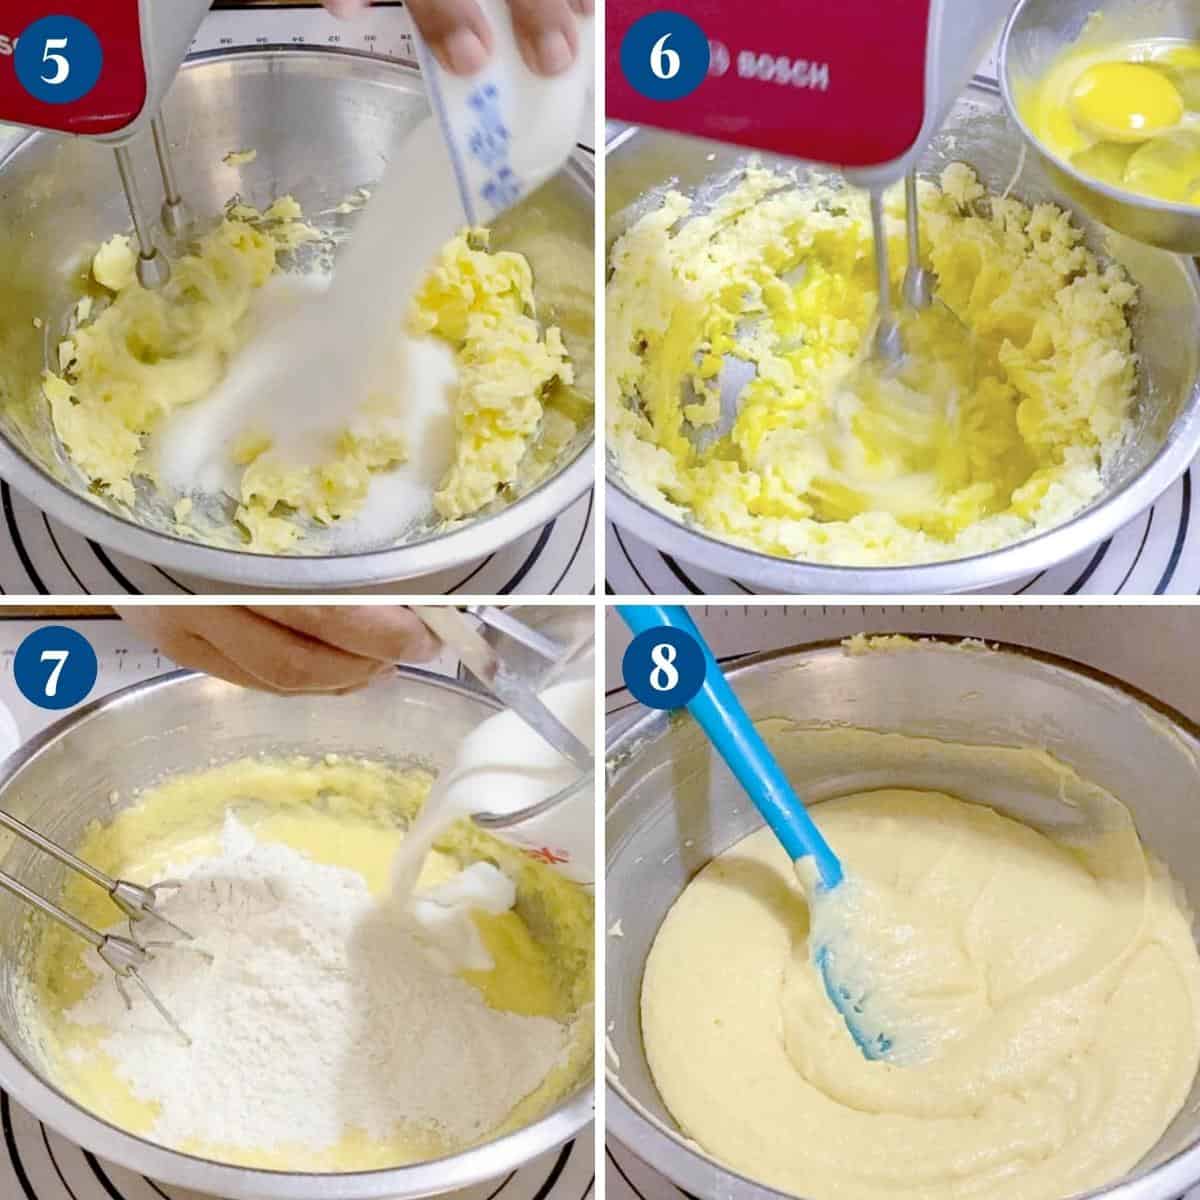 Progress pictures making the butter based cake batter